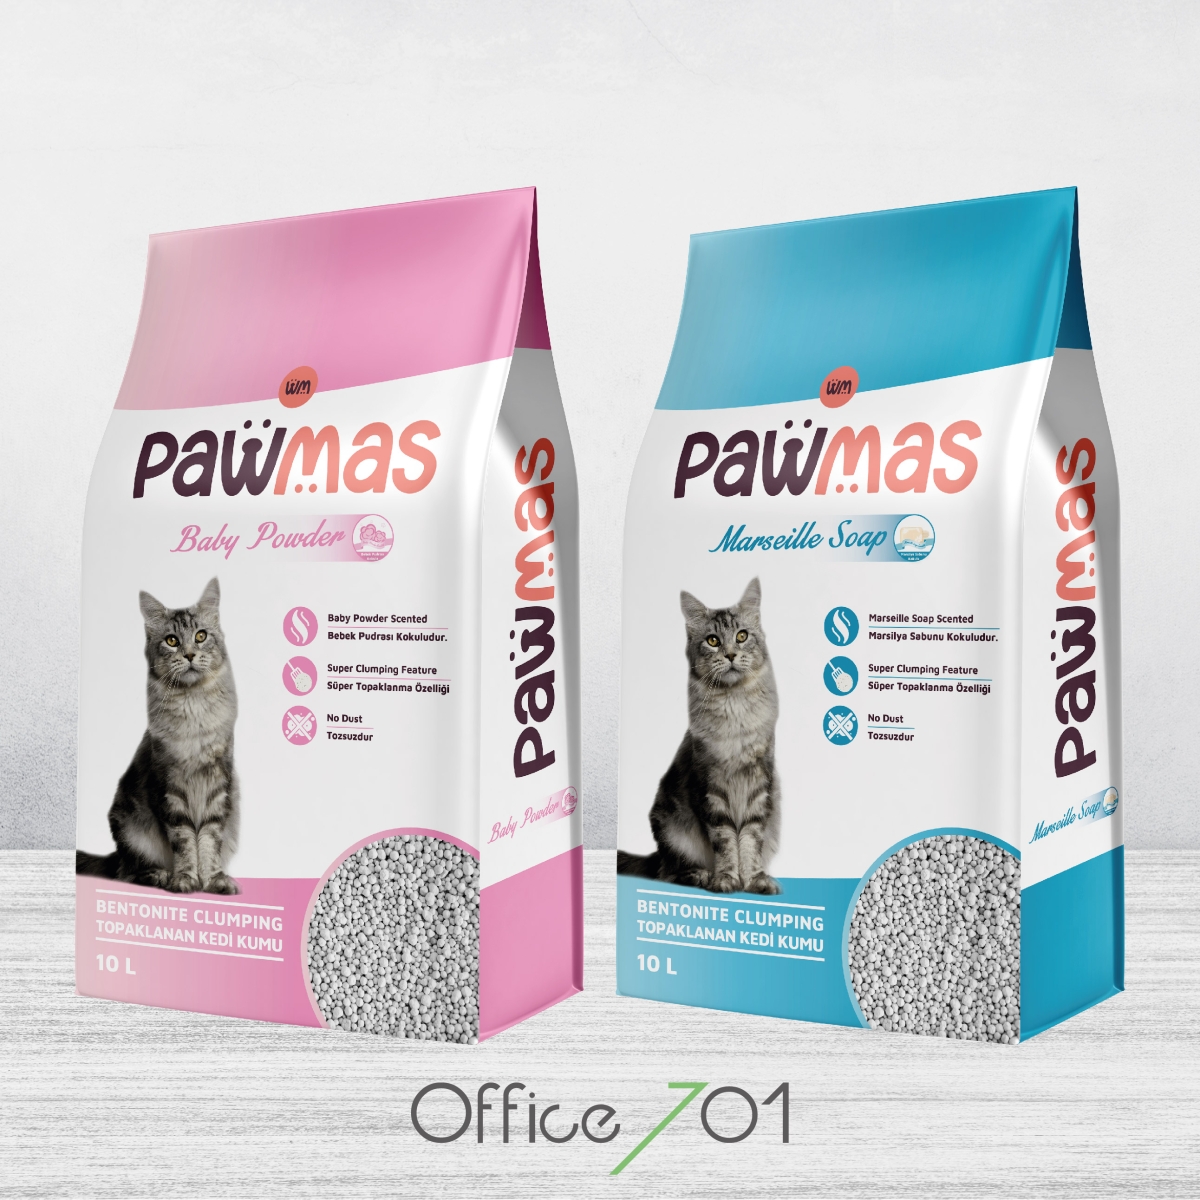 Office701 | Pawmas Bentonit Kedi Kumu Tasarımı